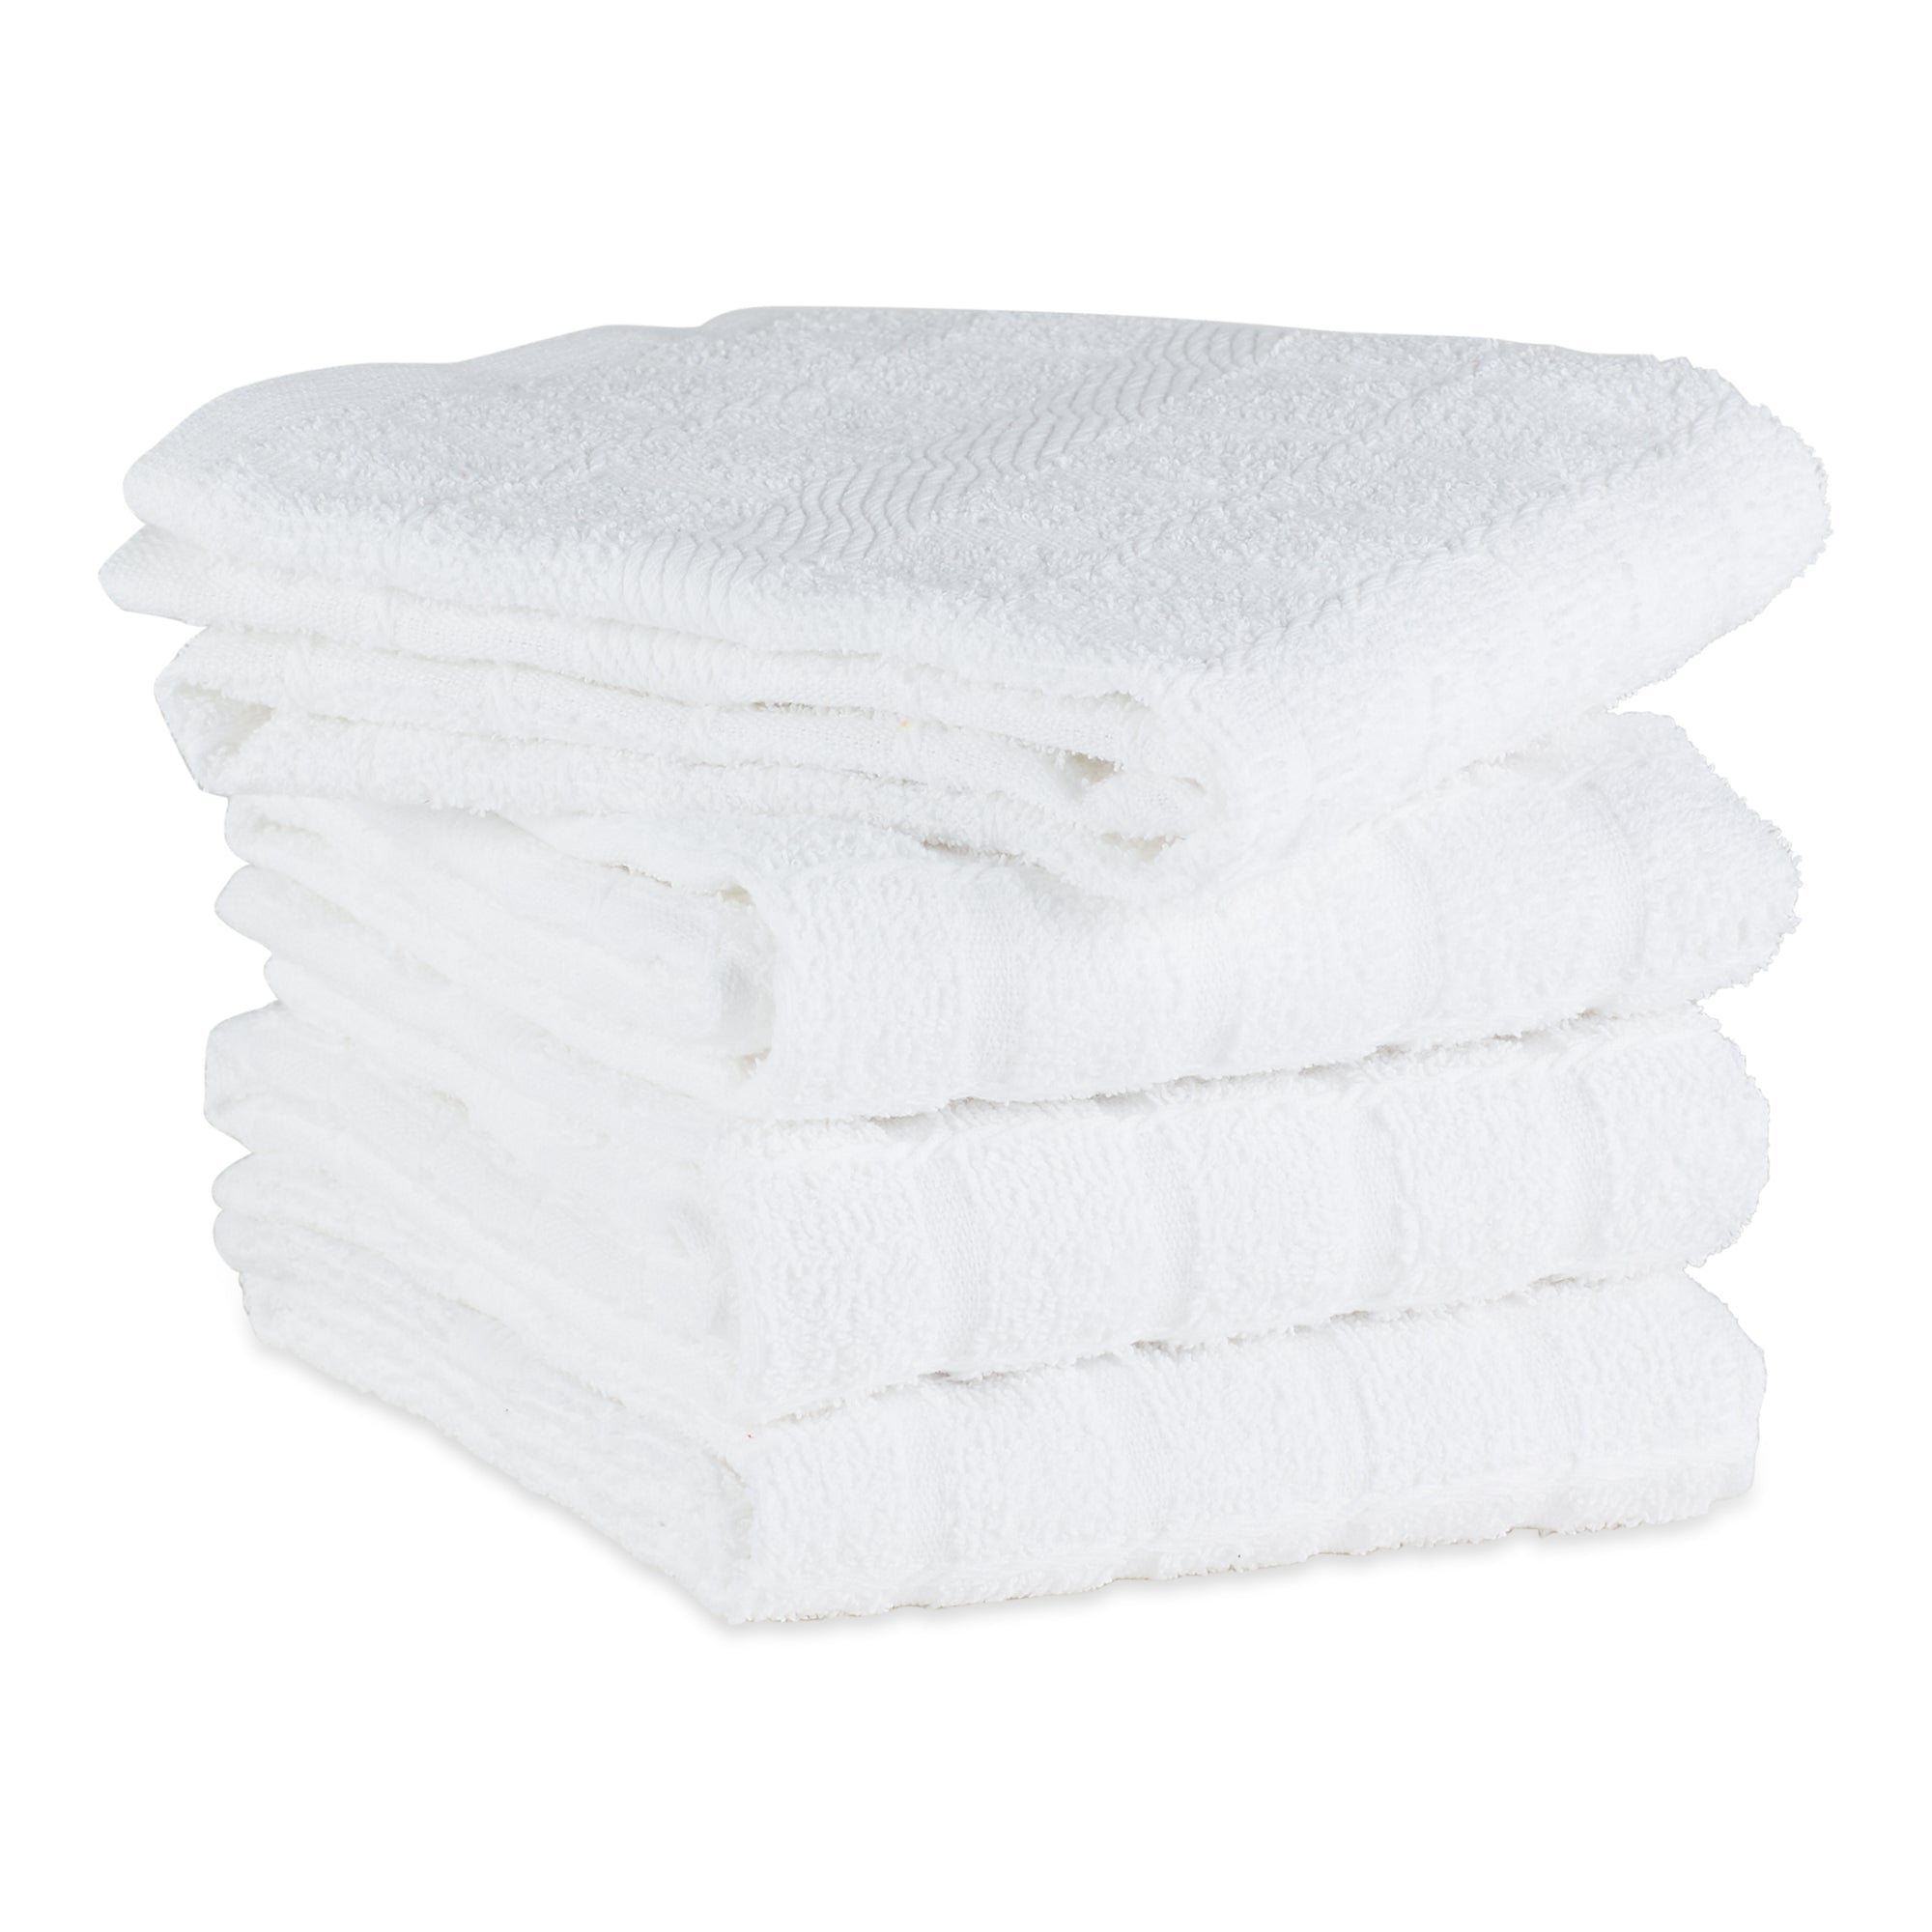 White Solid Windowpane Terry Dishtowels, Set of 4 - Dish Towels